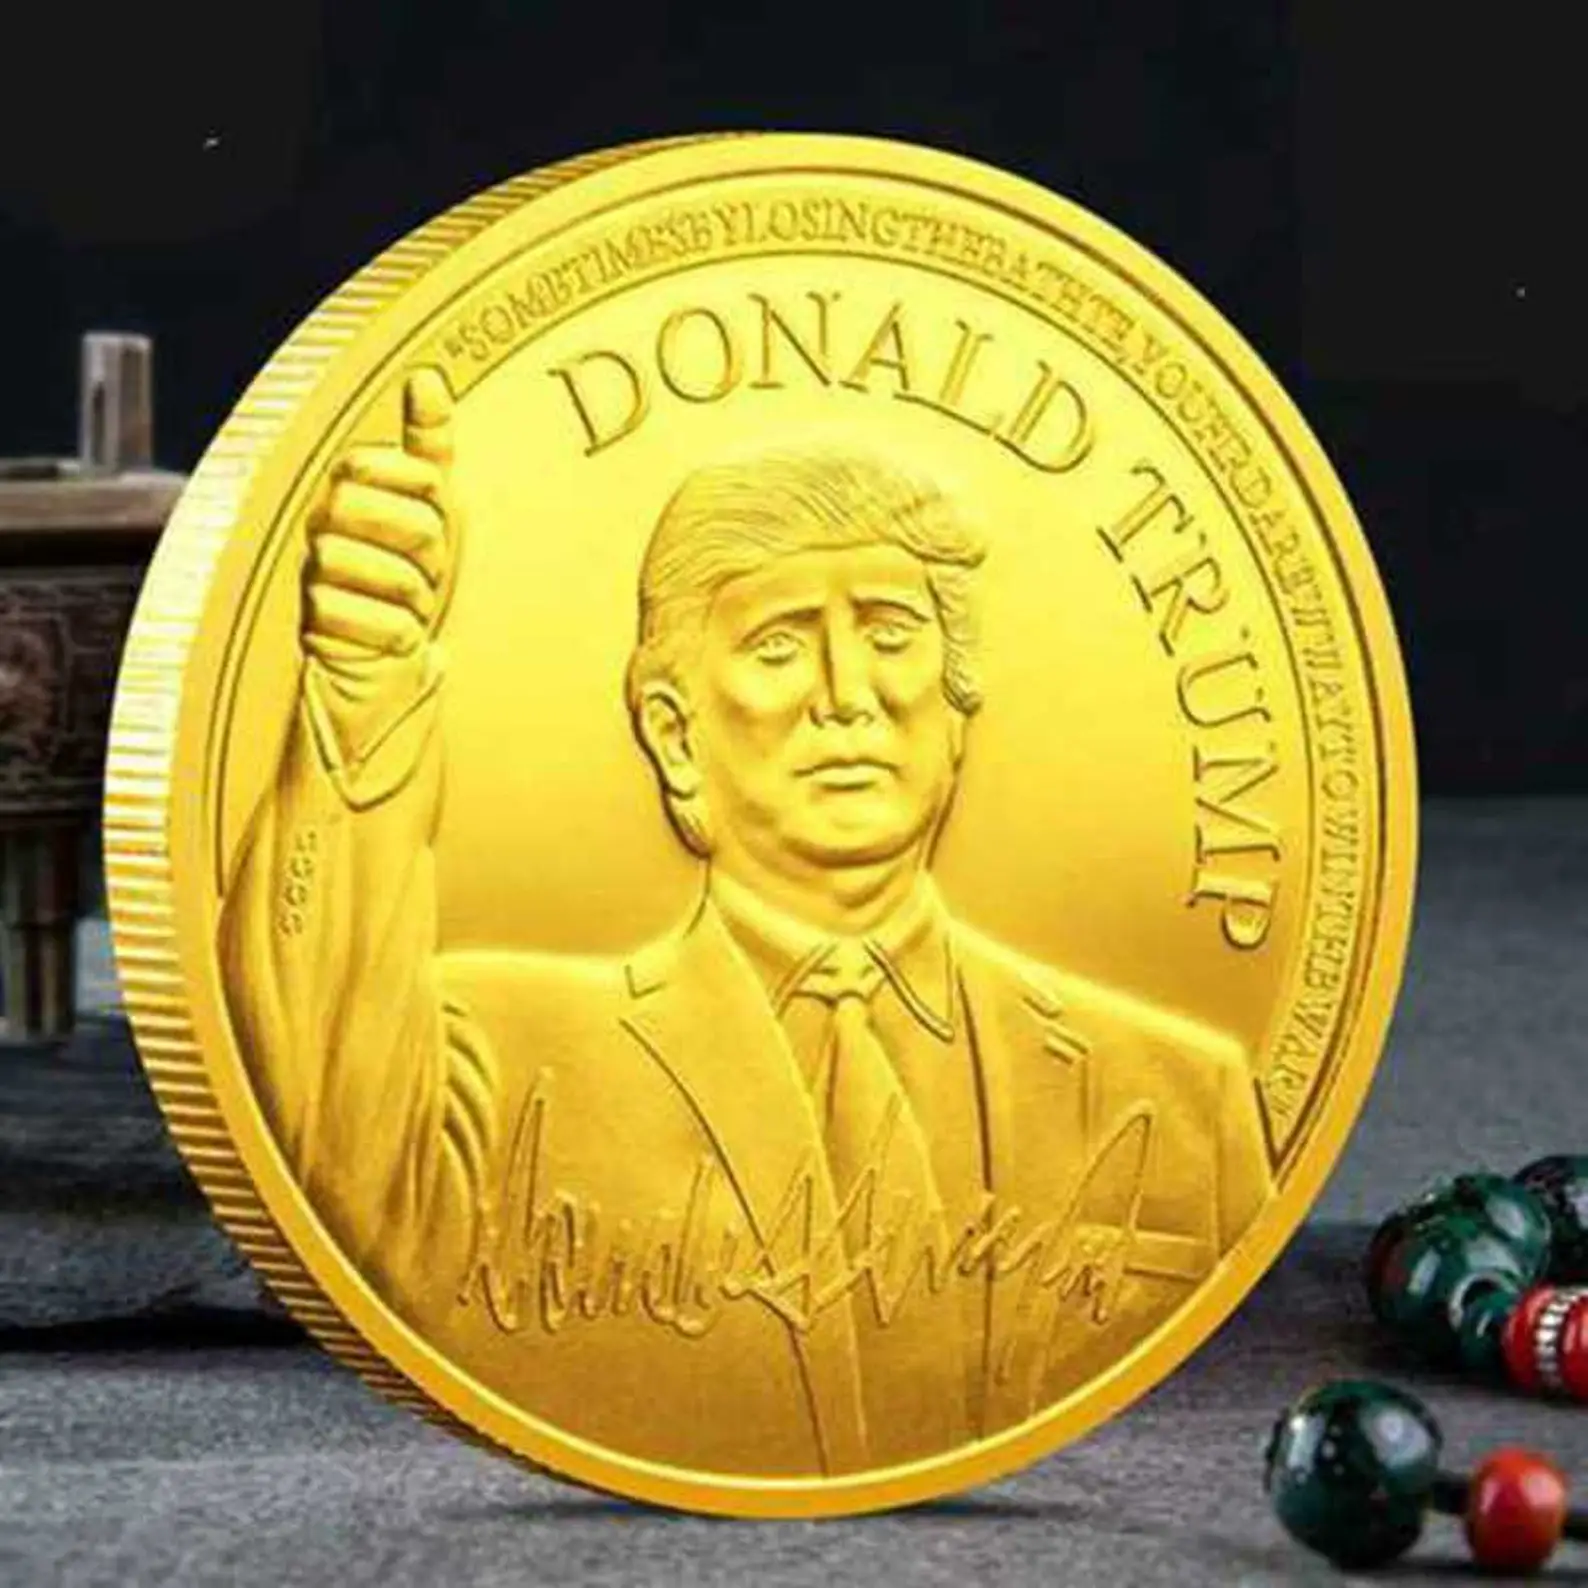 Donald Trump President OFFICIAL GOLD Dollar Commemorative Coin